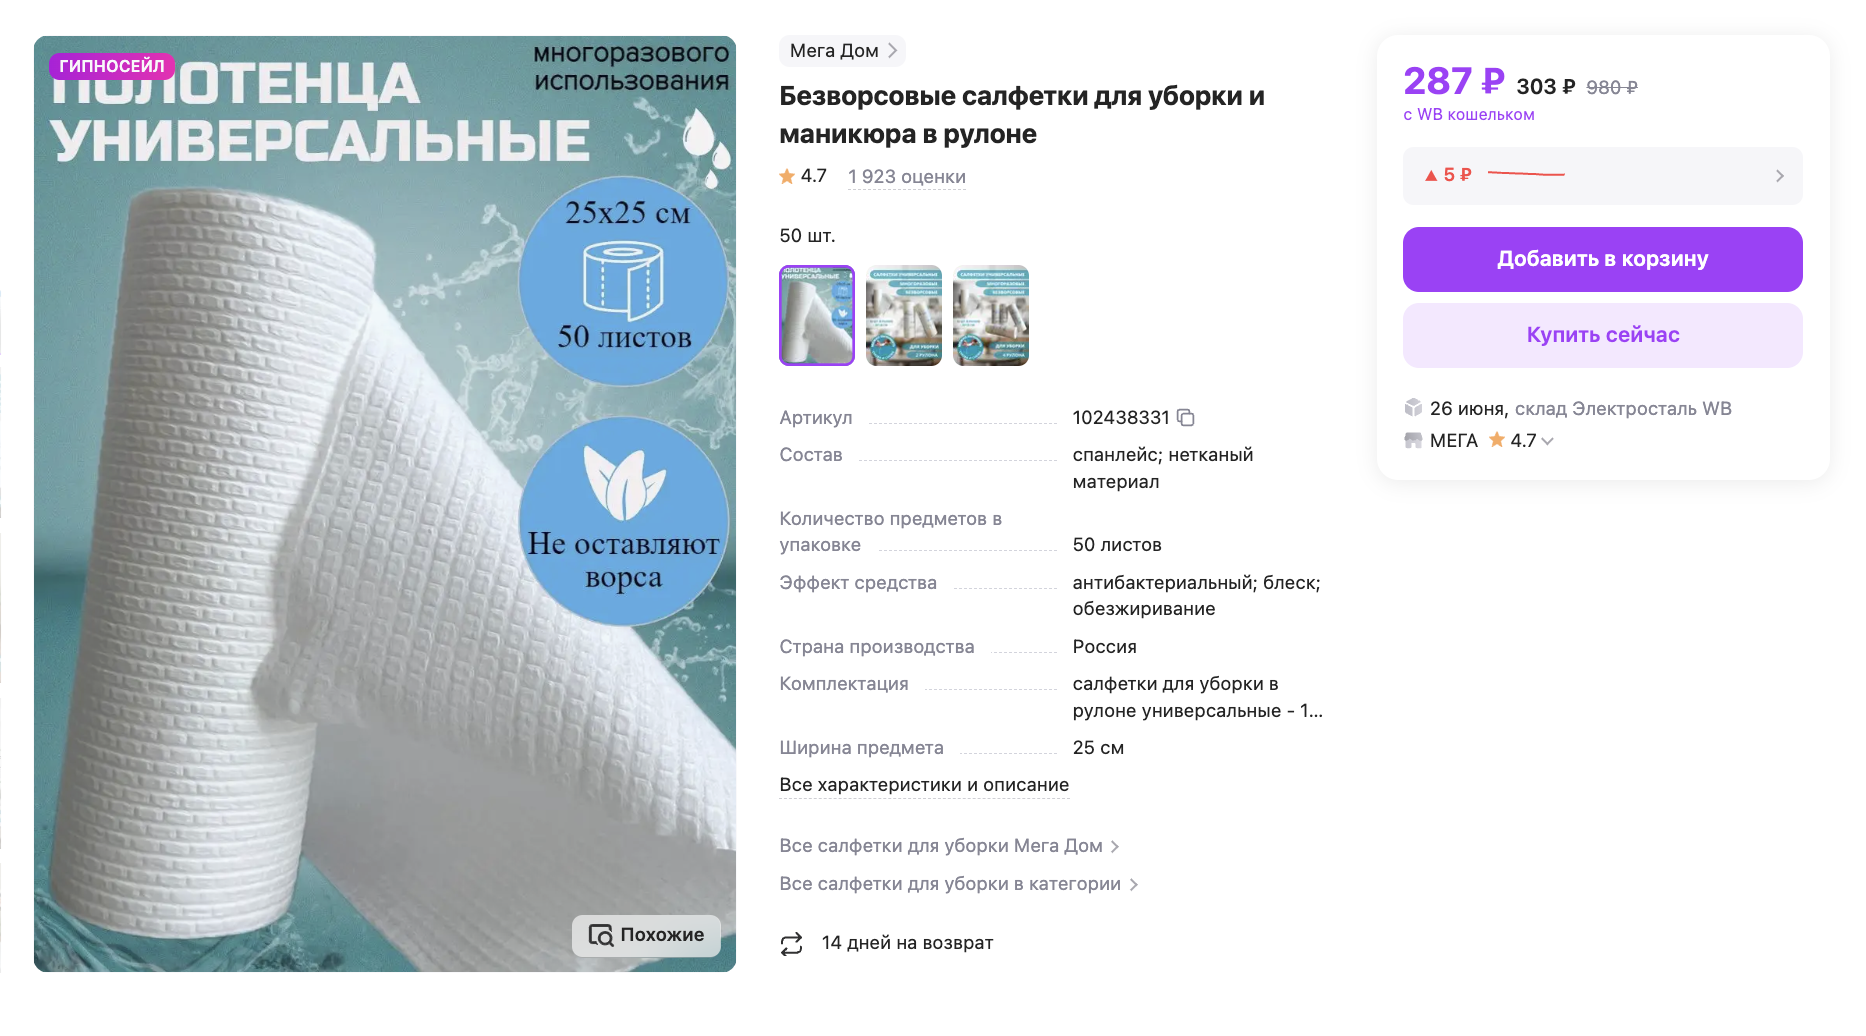 Рулон безворсовых салфеток стоит около 300 ₽. Источник: wildberries.ru